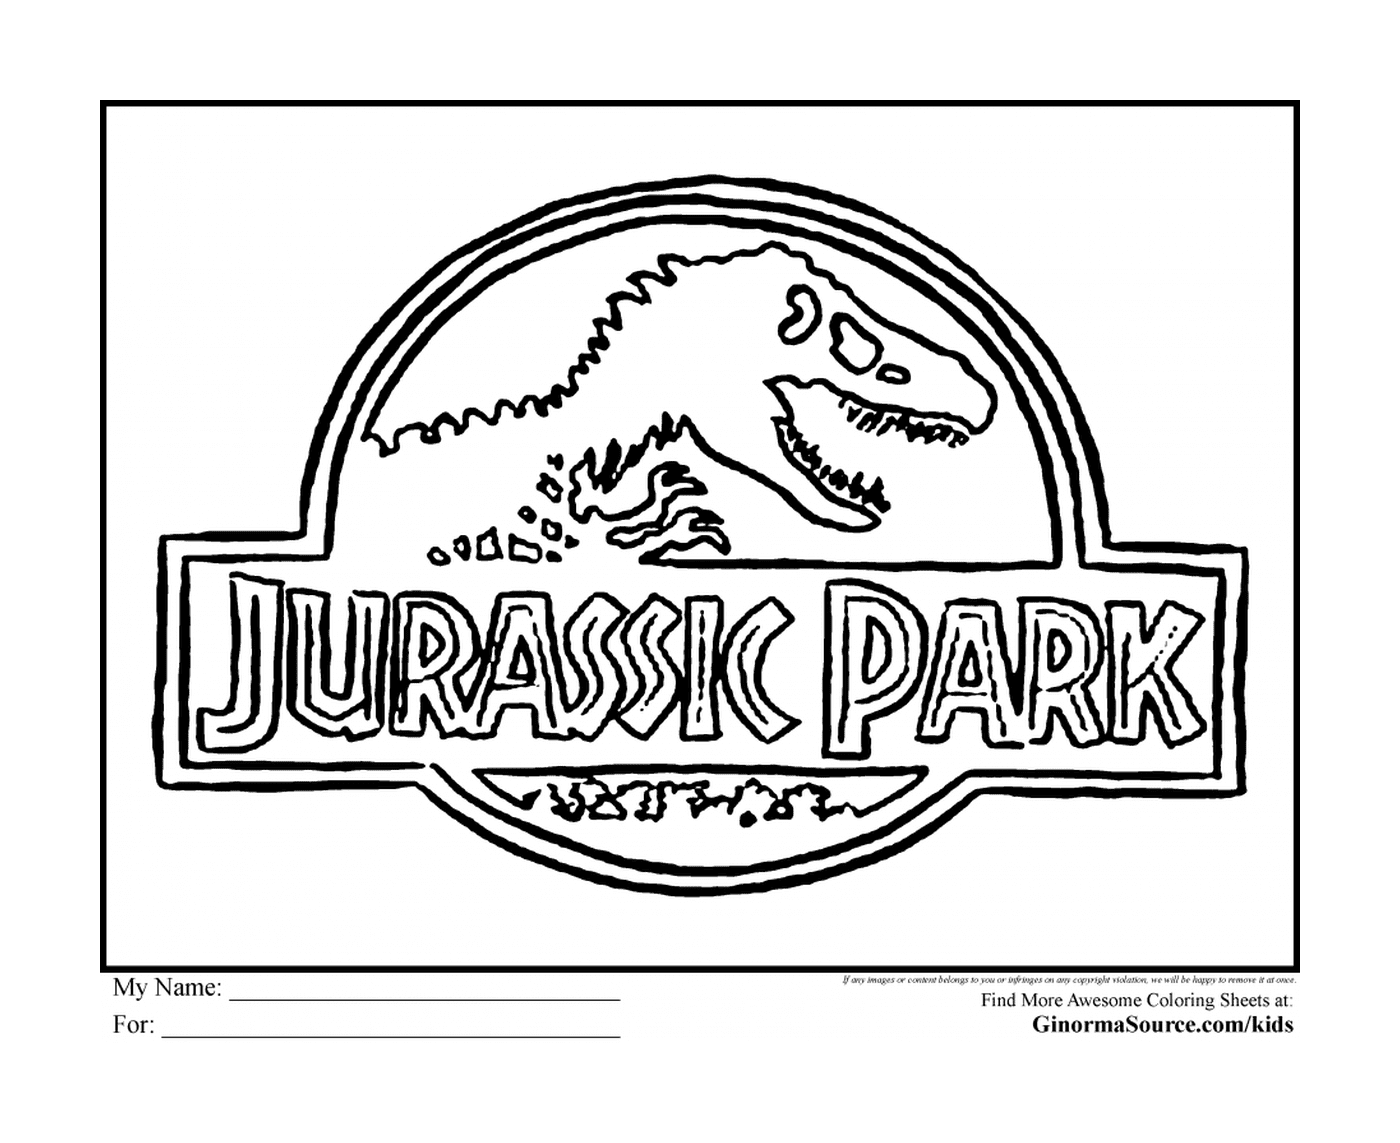  Logo Jurassic Park, simbolo di avventura 